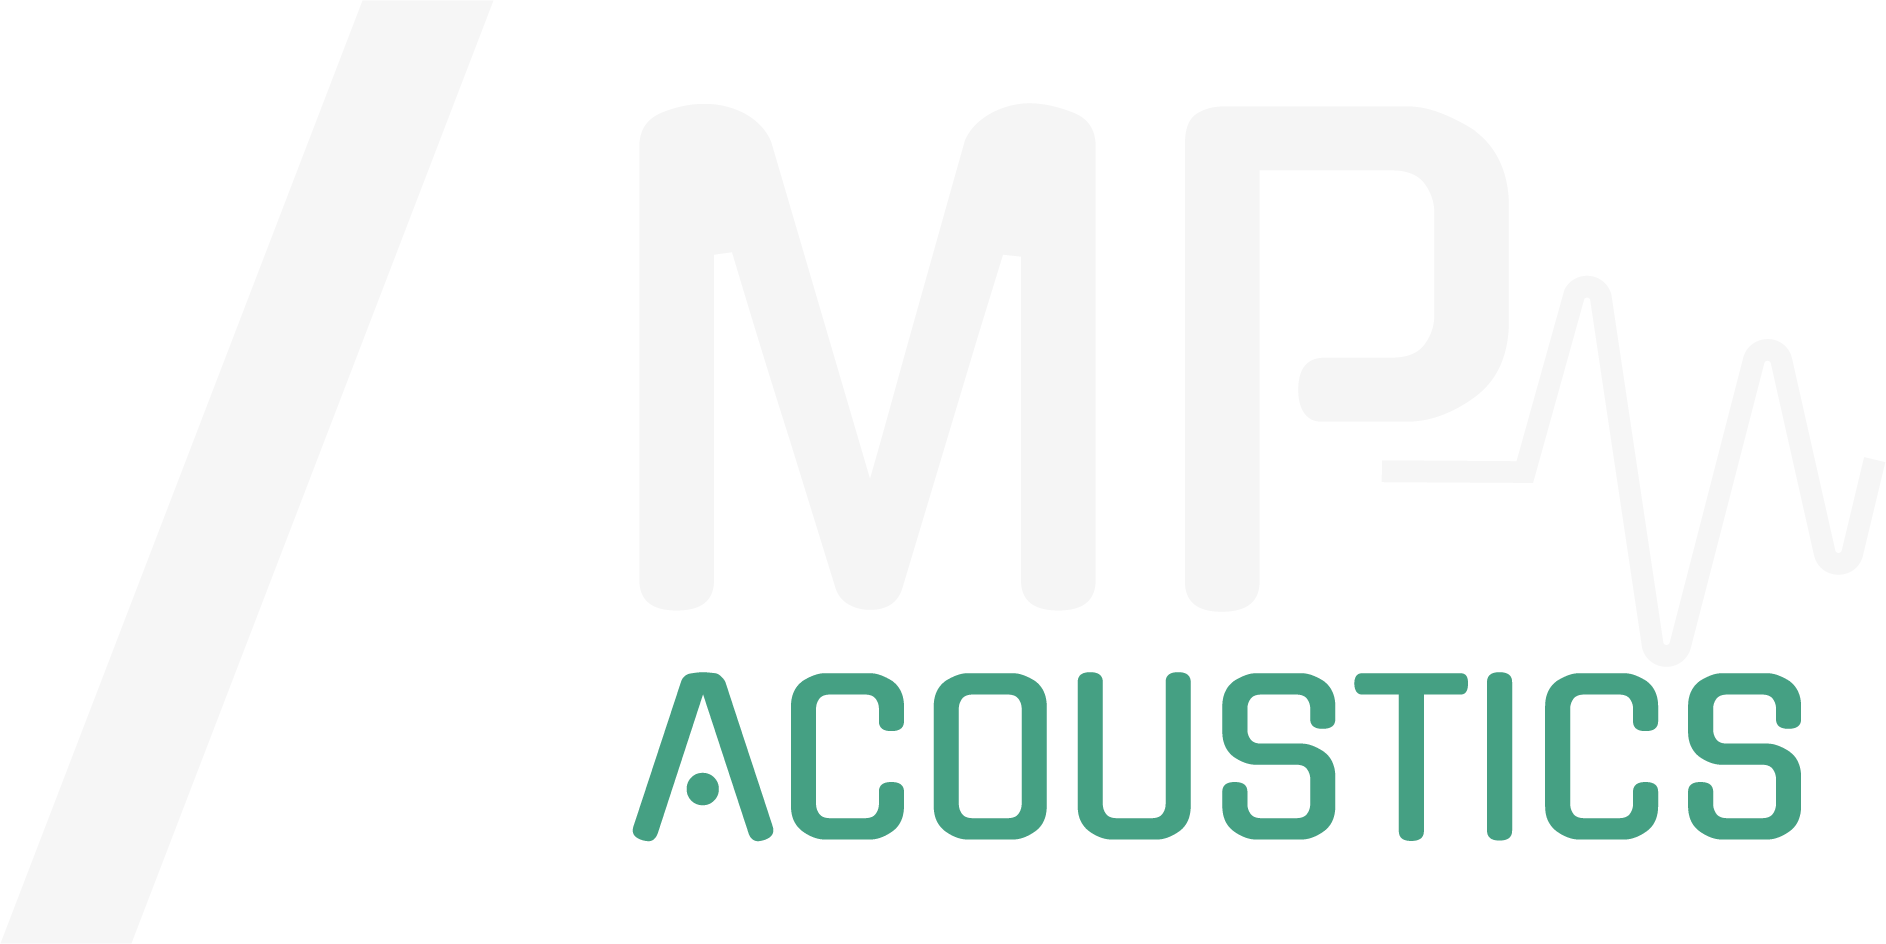 MP Acoustics